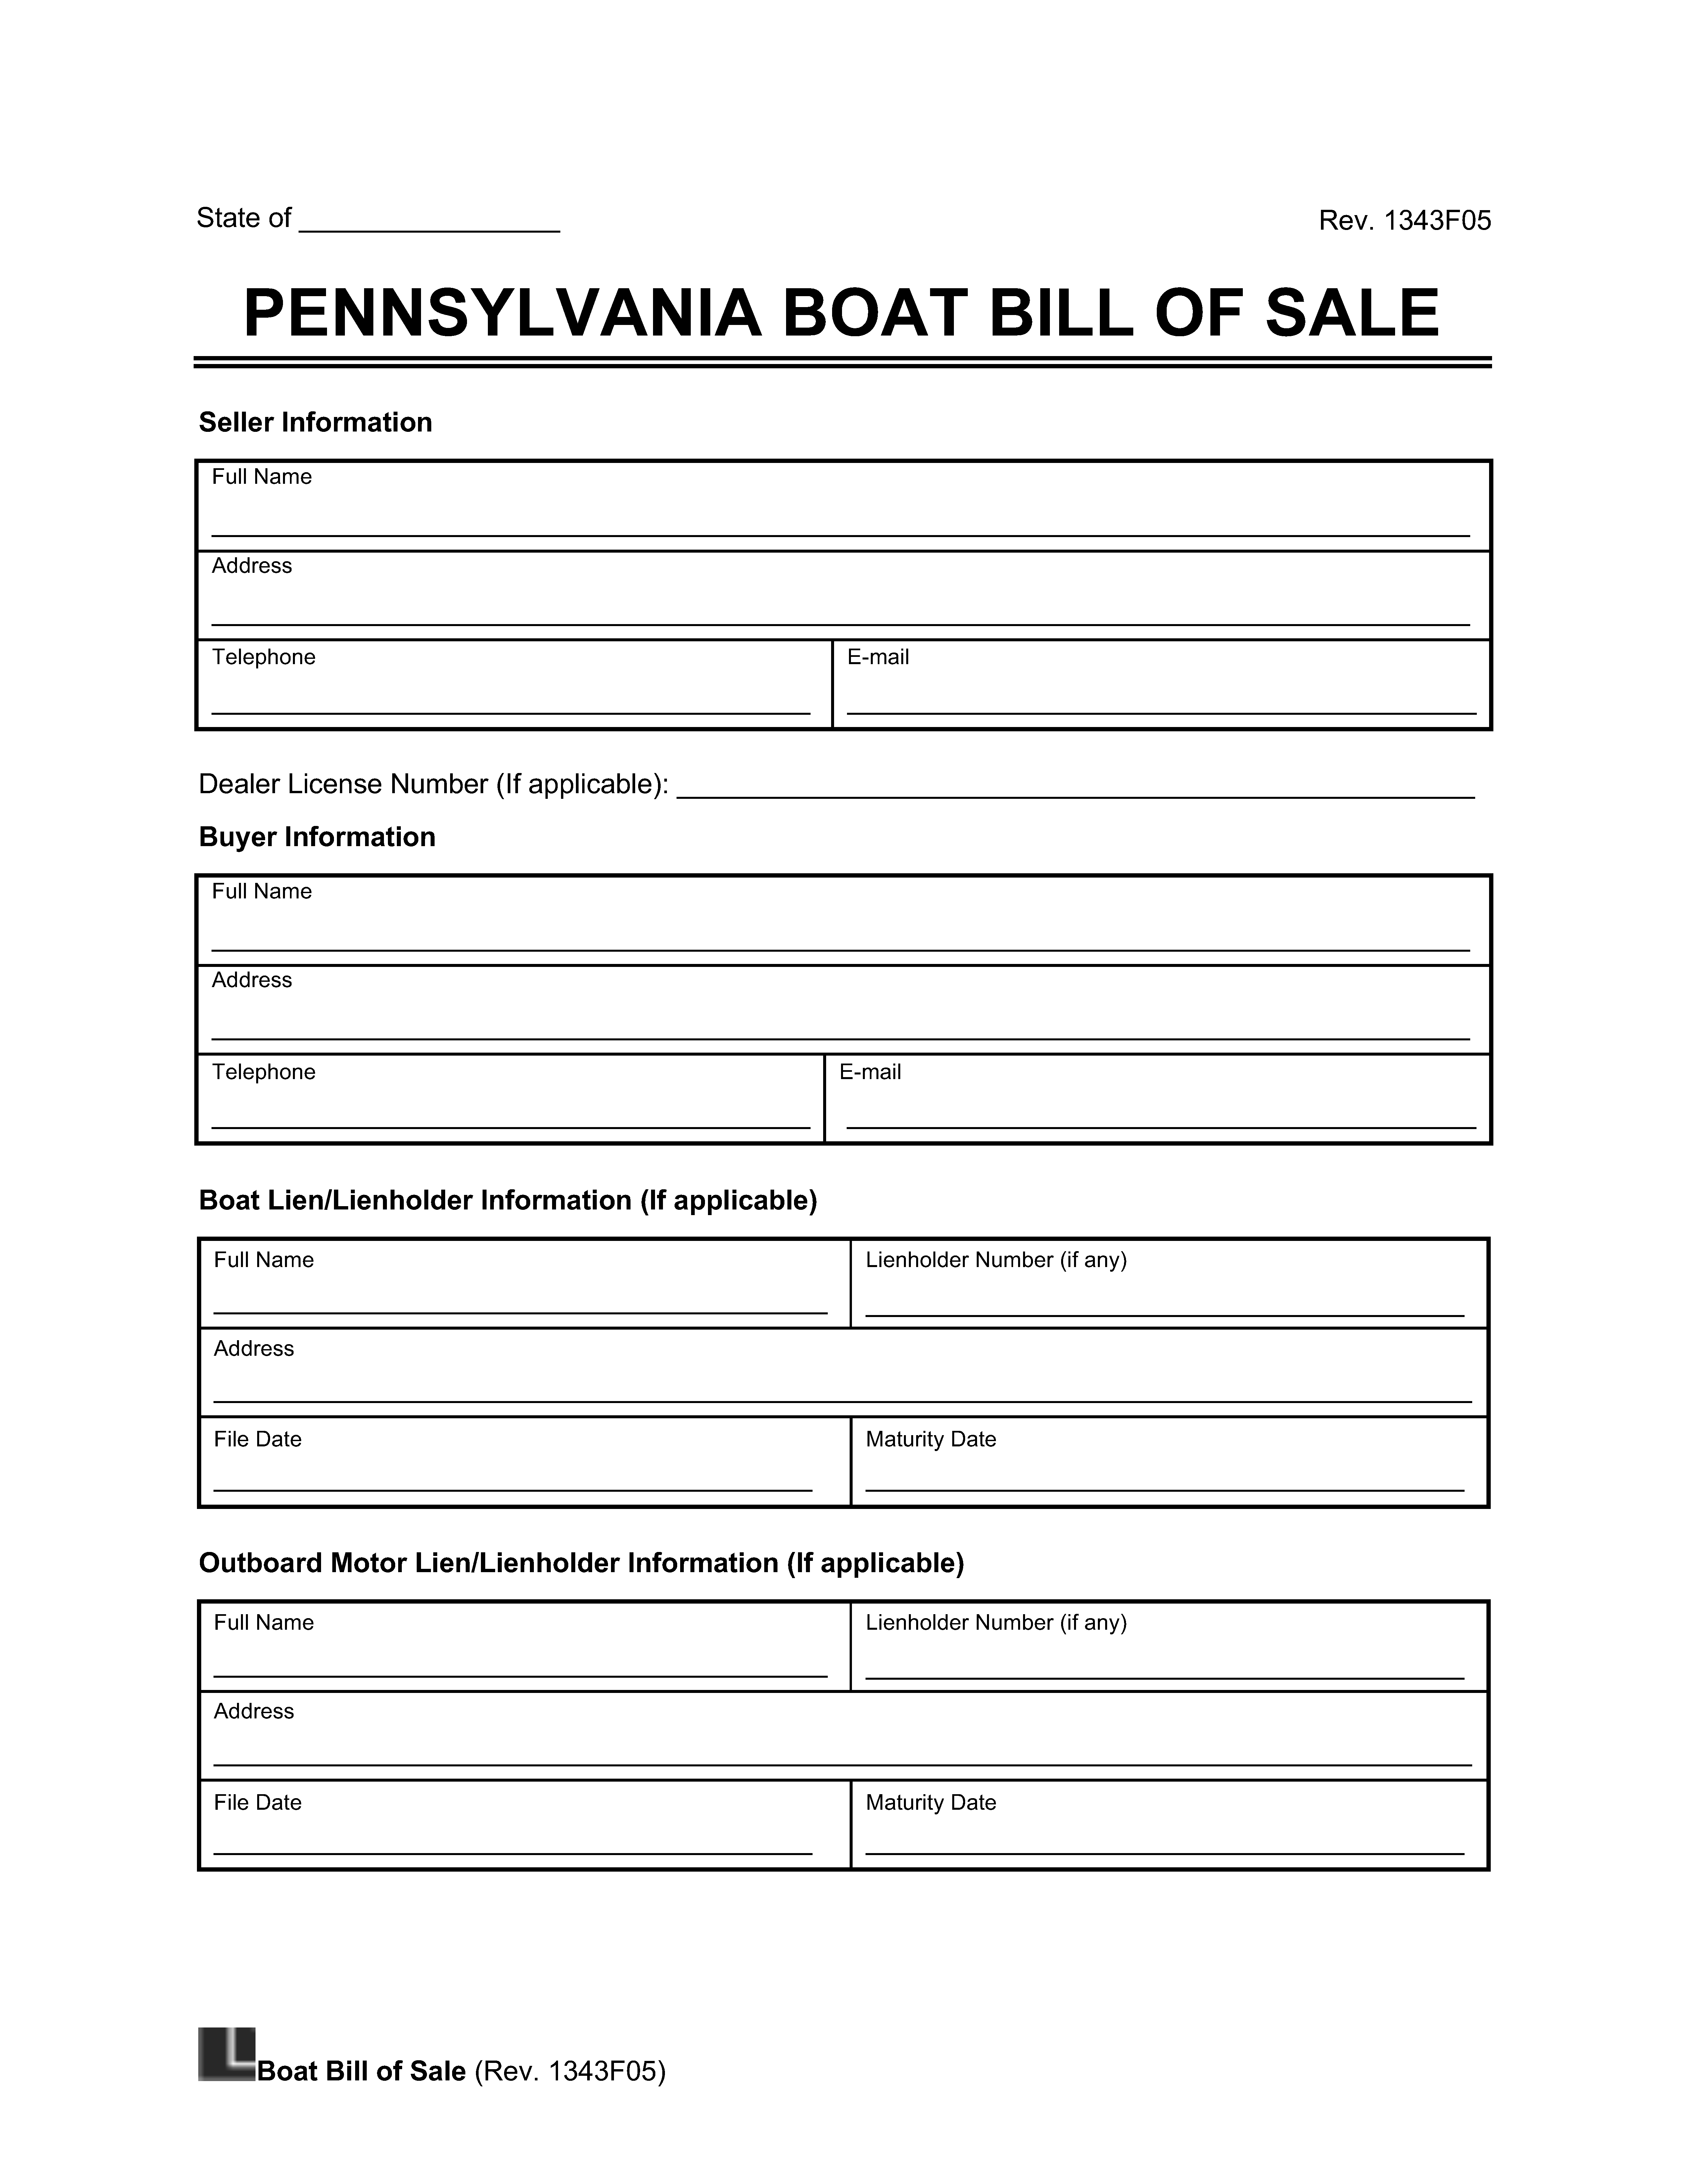 Pennsylvania Boat Bill of Sale screenshot